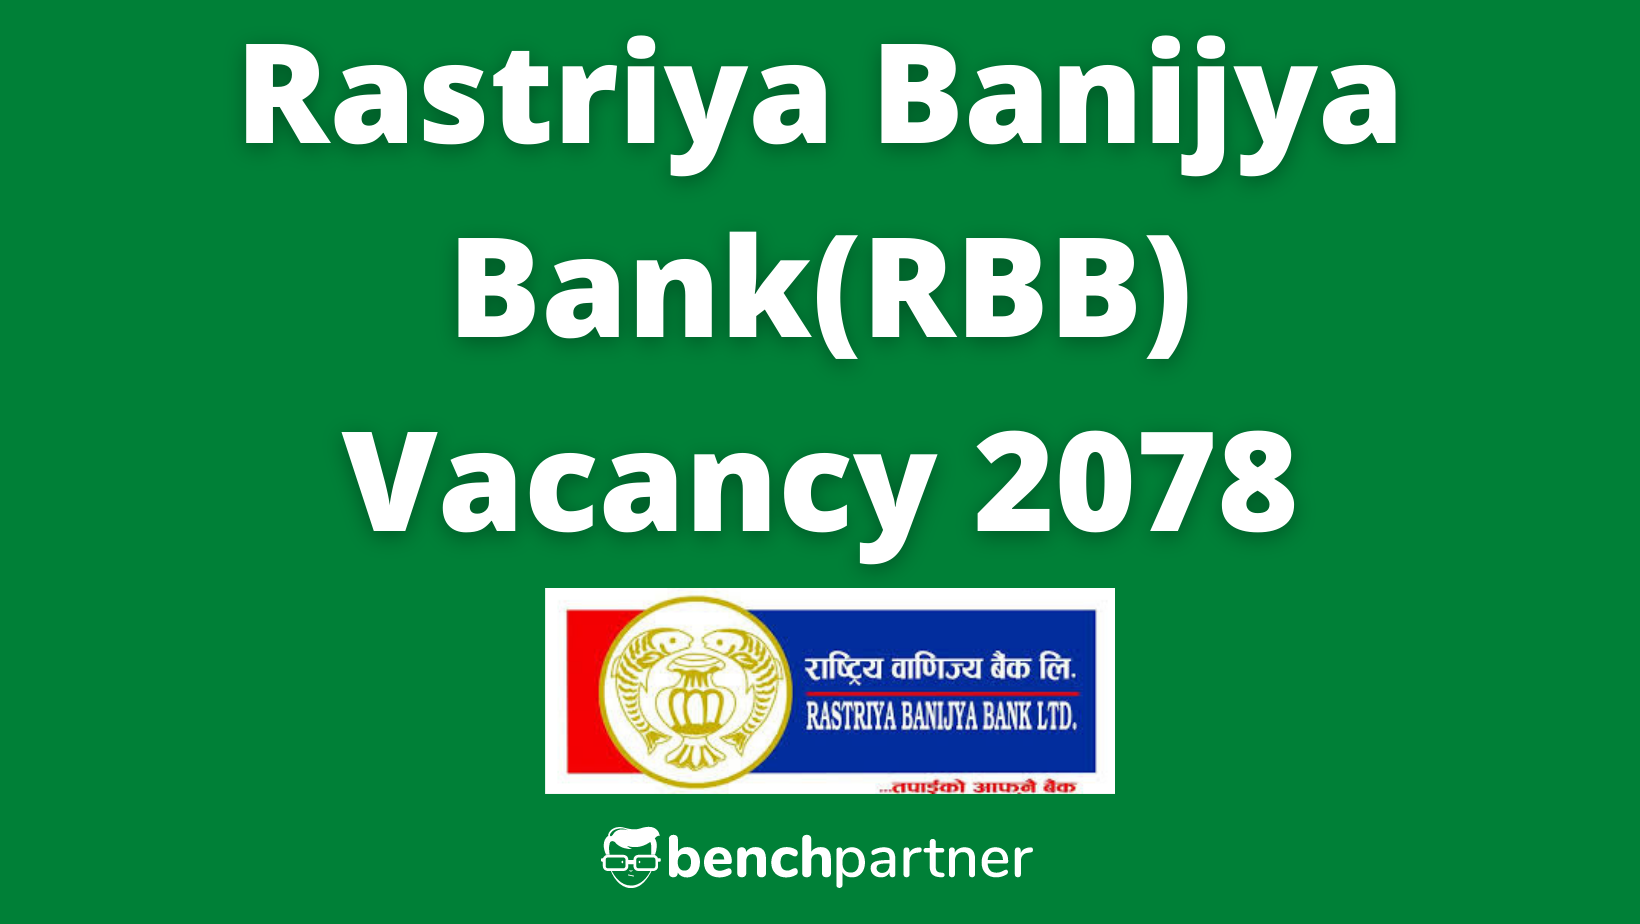 Rastriya Banijya Bank(RBB) Vacancy 2078